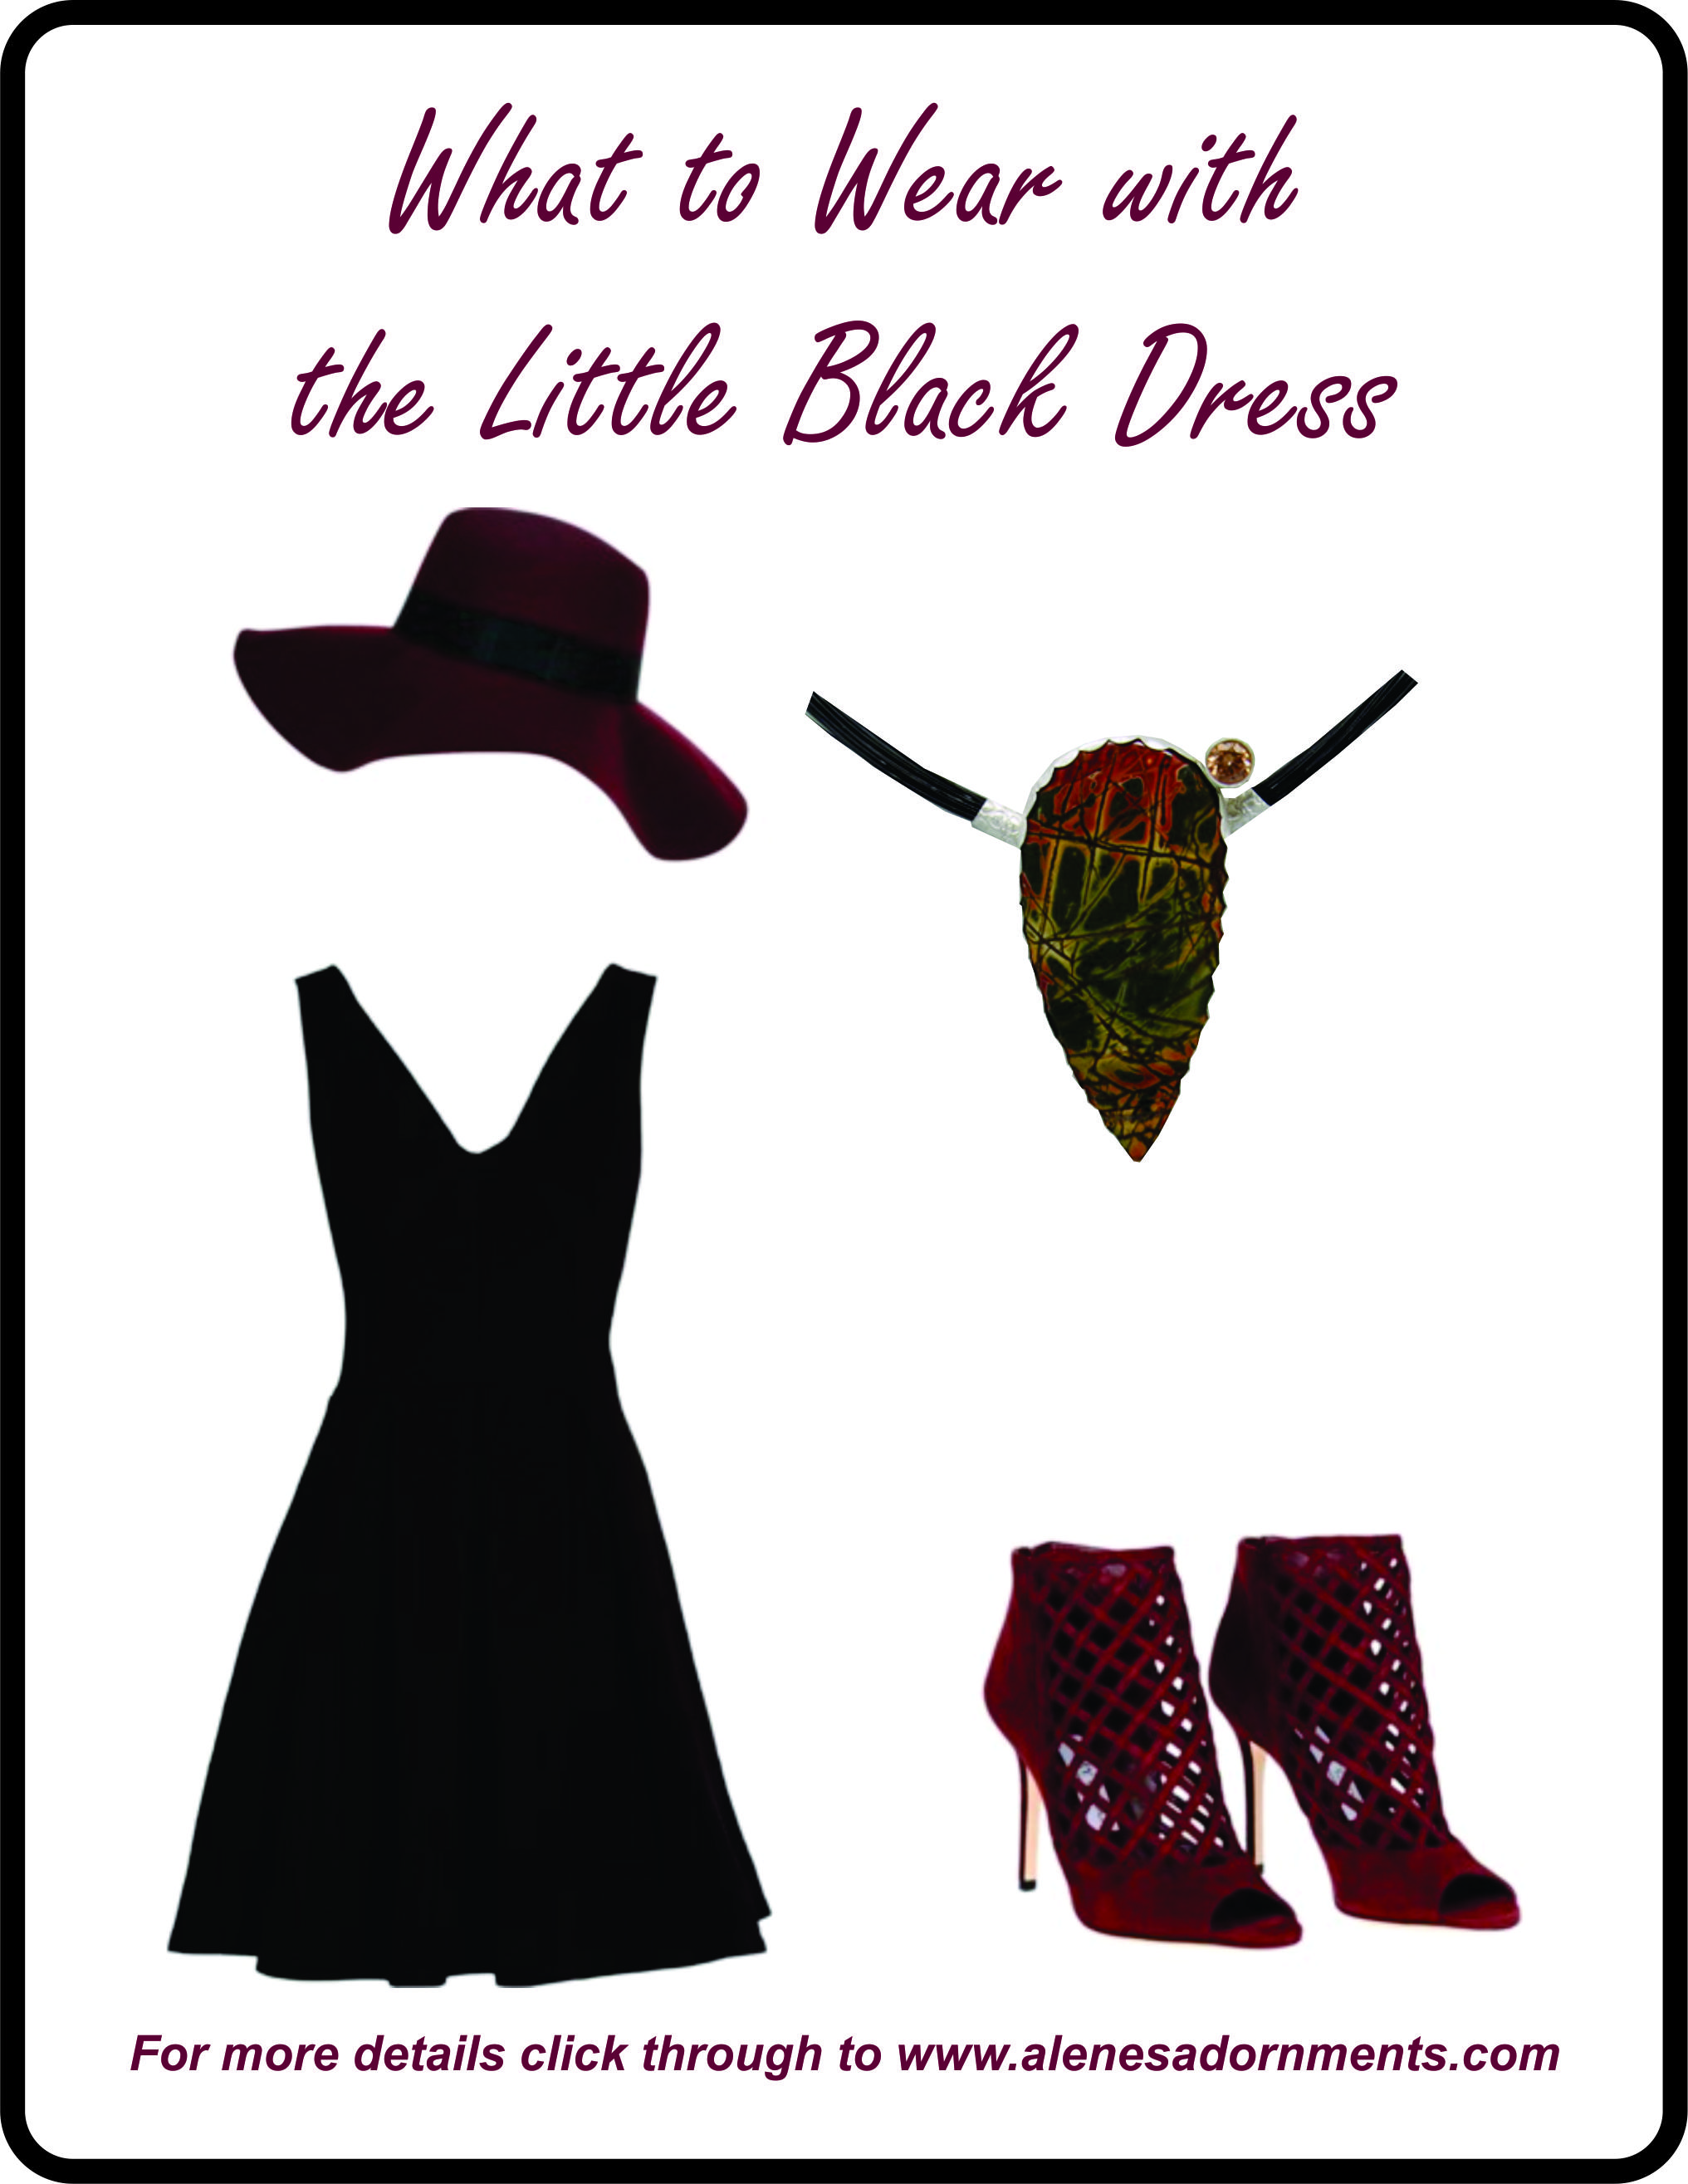 The essential Little Black Dress